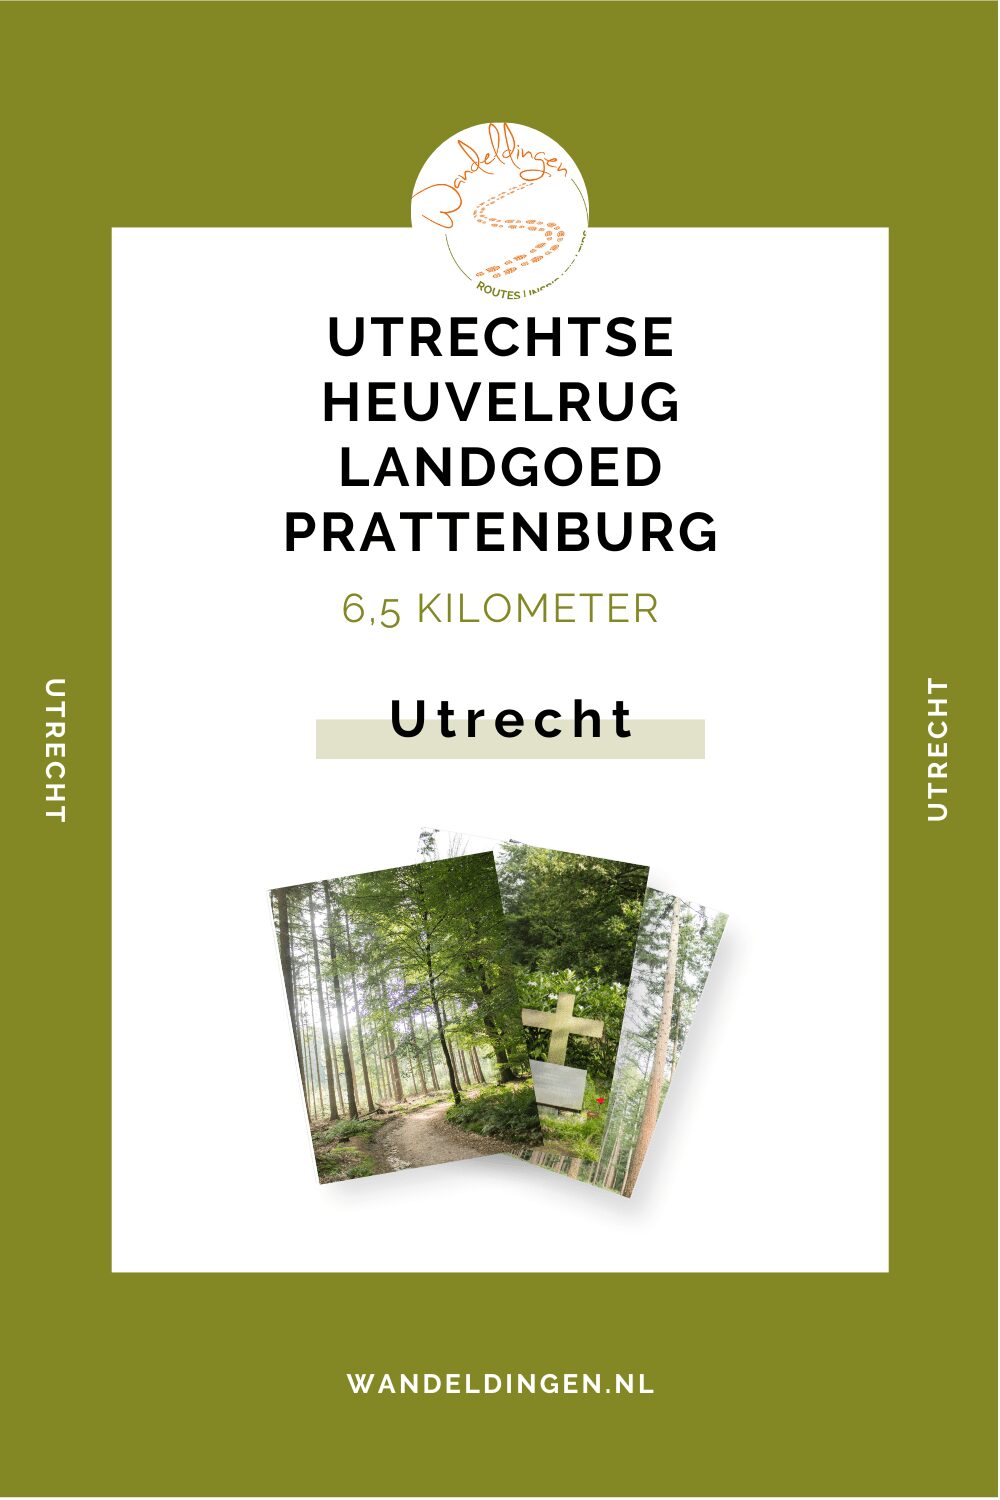 Landgoed Prattenburg